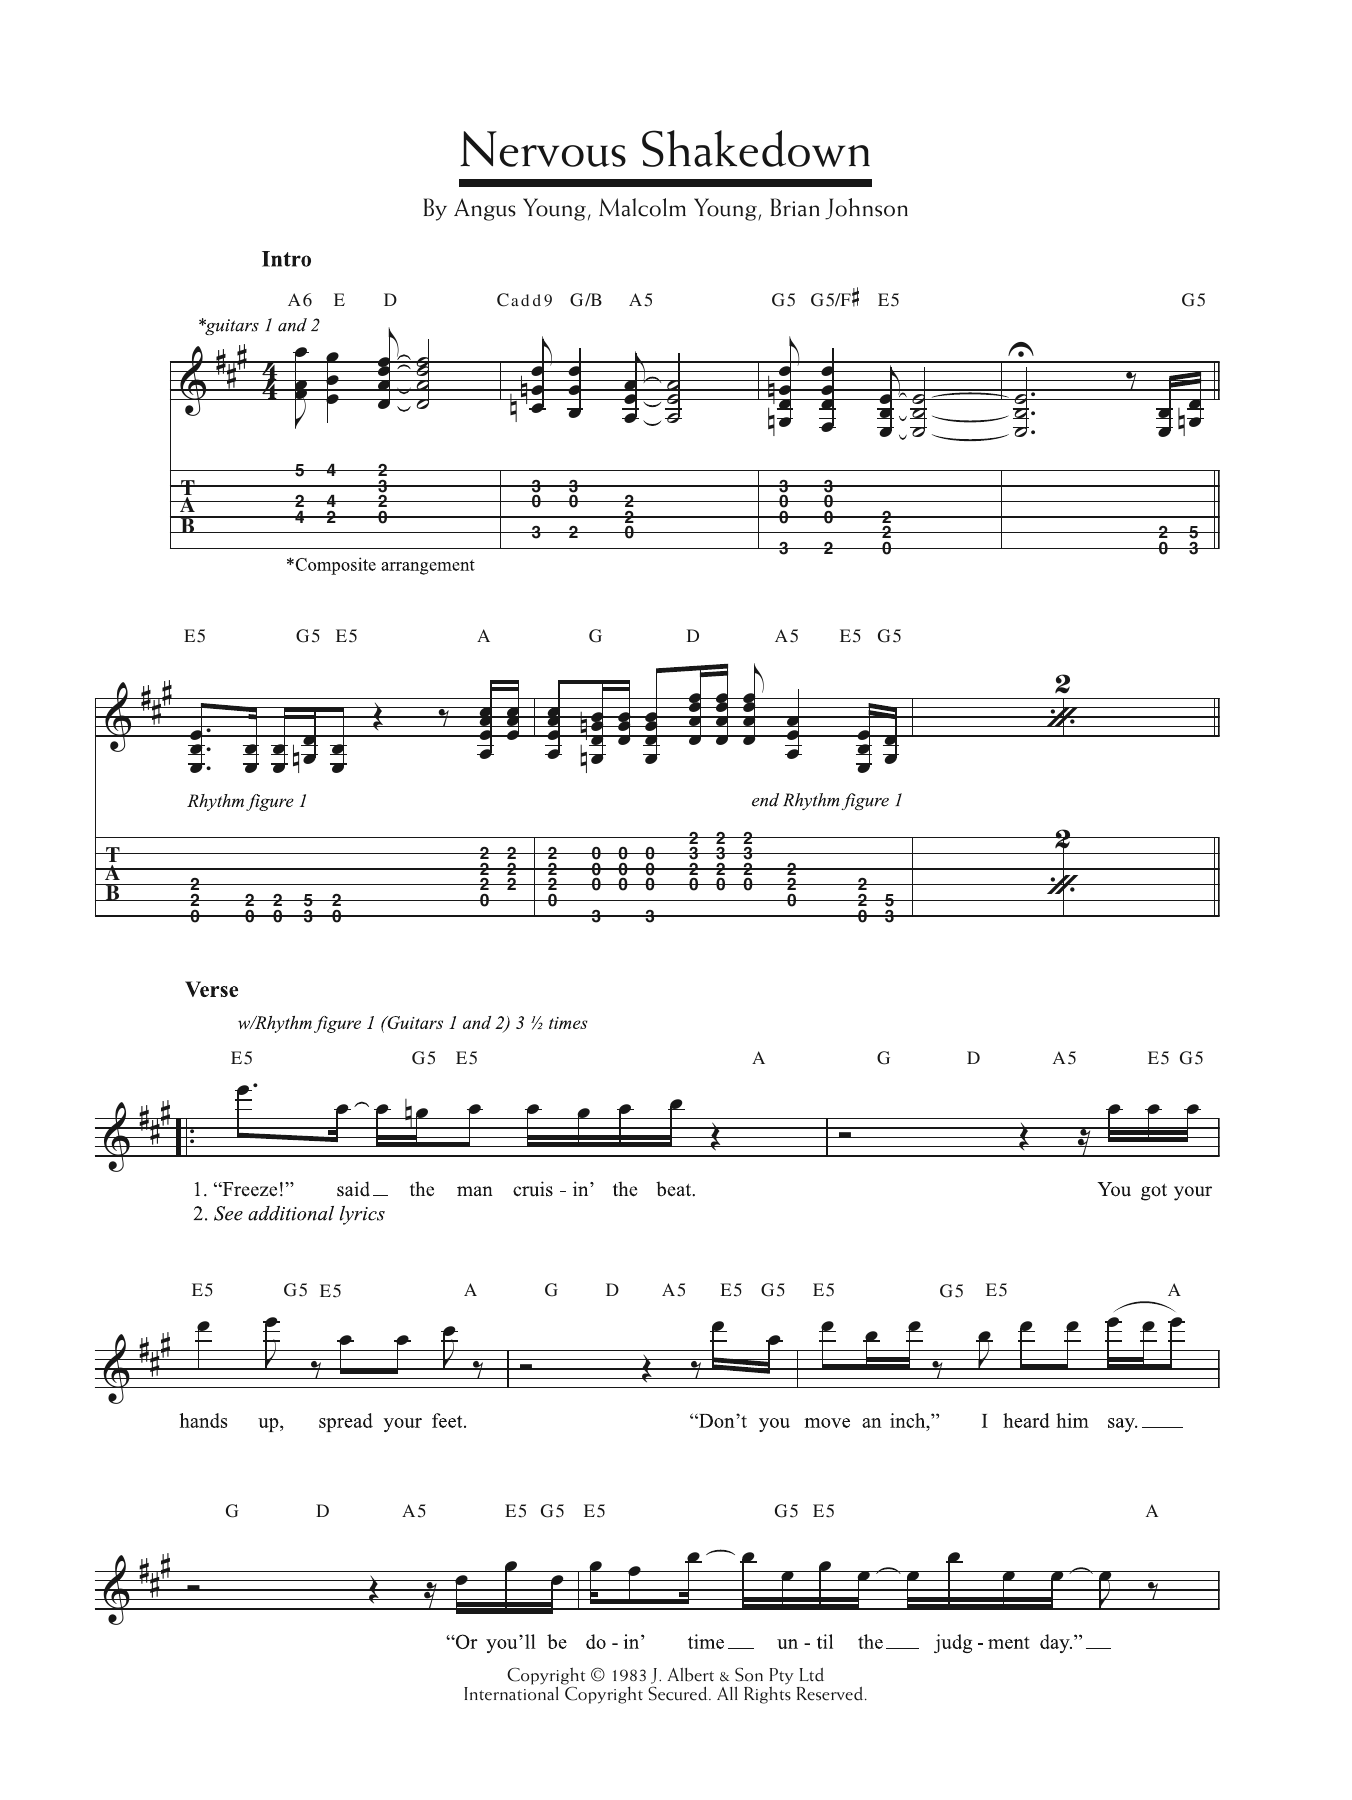 AC/DC Nervous Shakedown sheet music notes and chords arranged for Guitar Chords/Lyrics